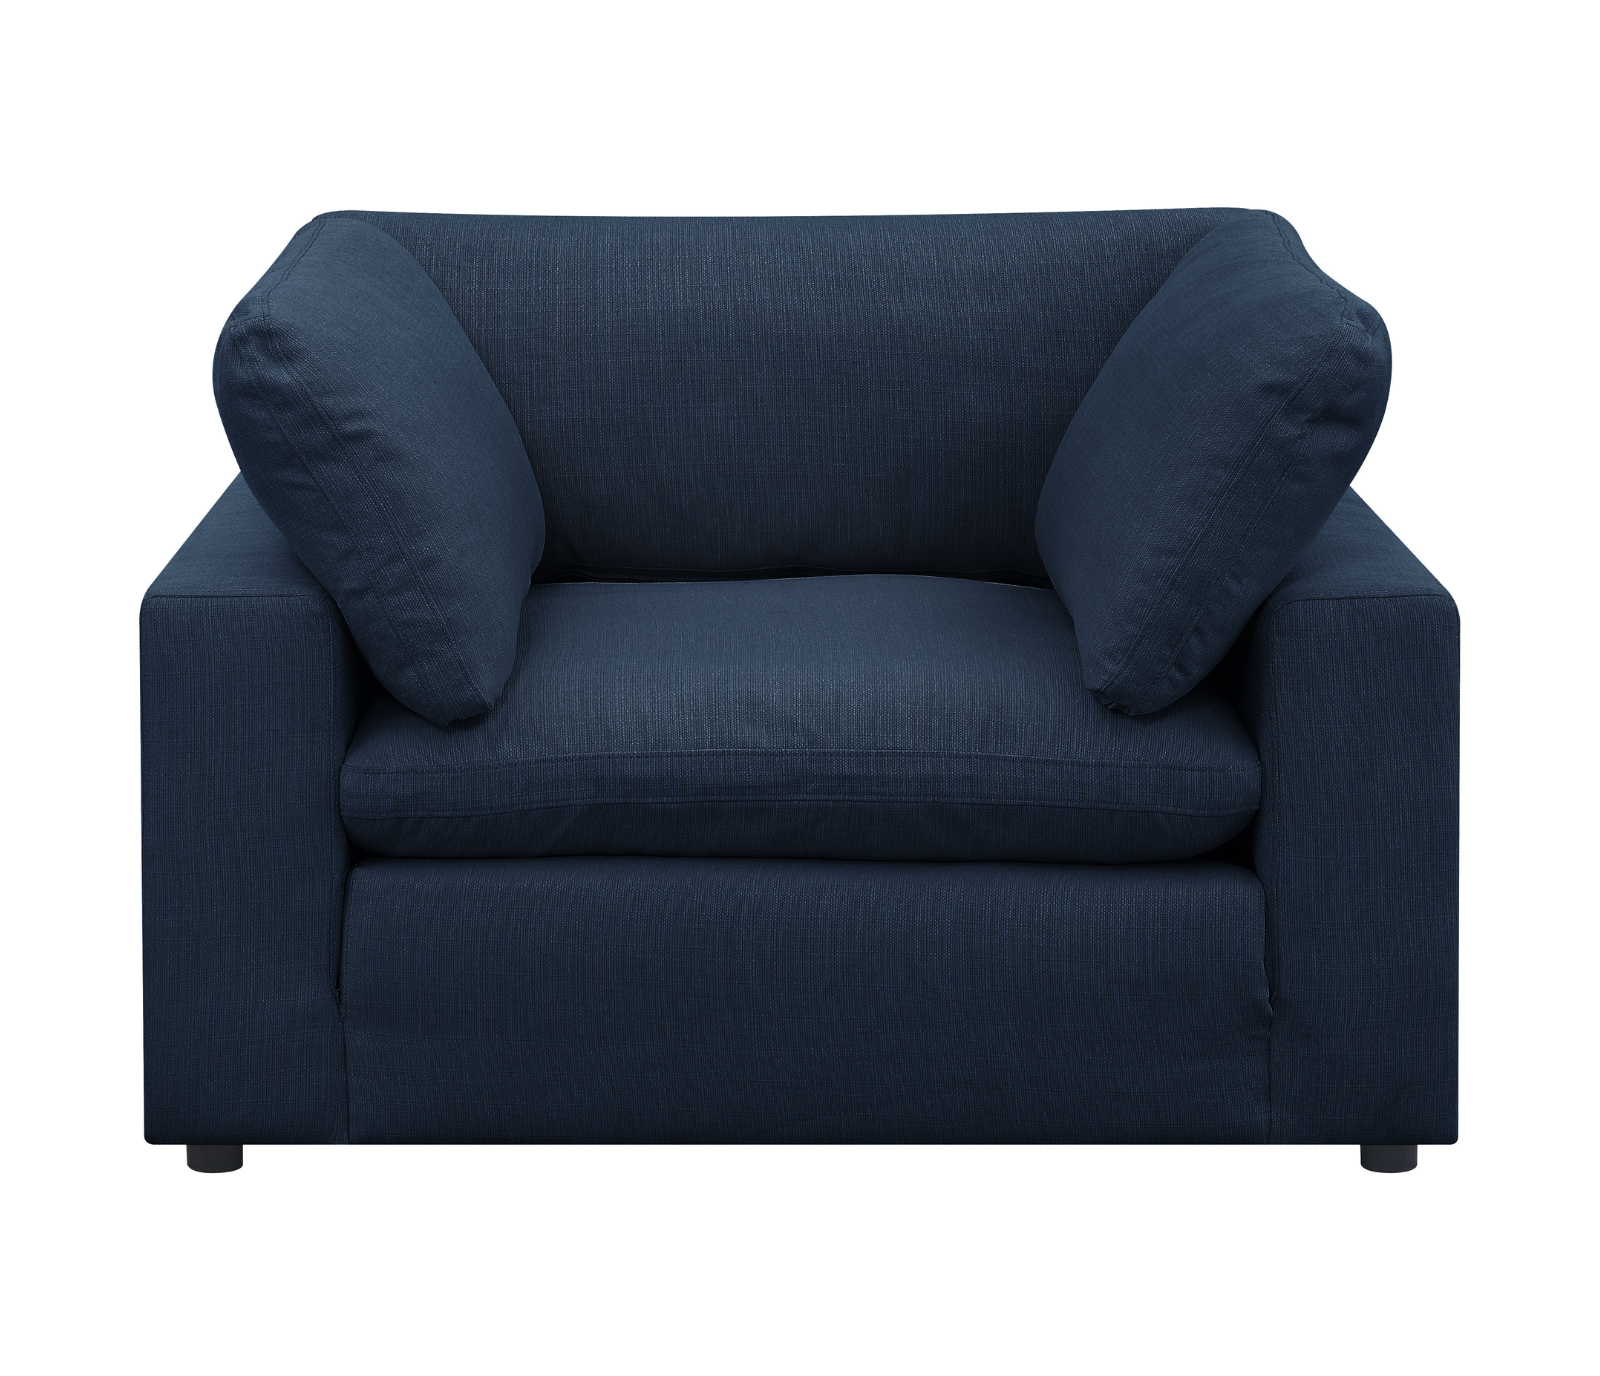 Cloud 9 Chair - Midnight Blue Fabric